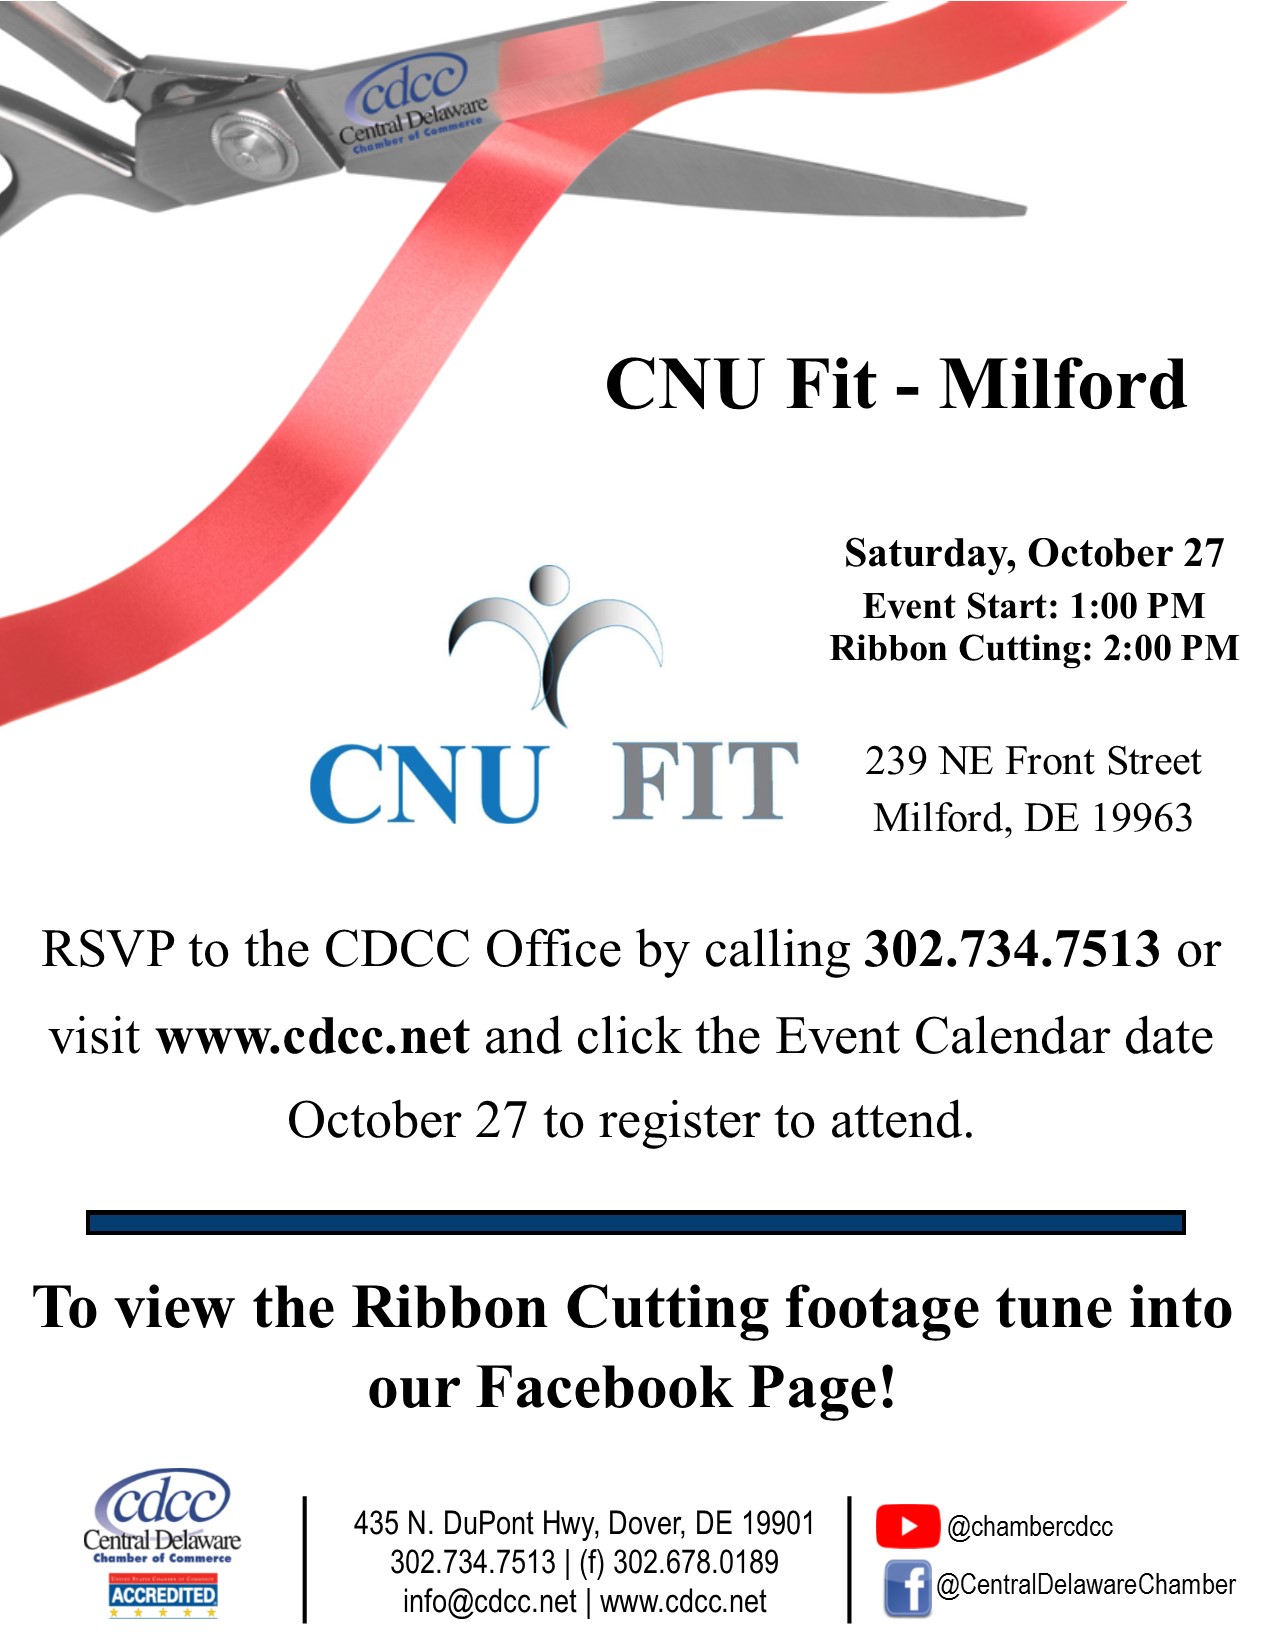 Ribbon Cutting - CNU Fit - Milford